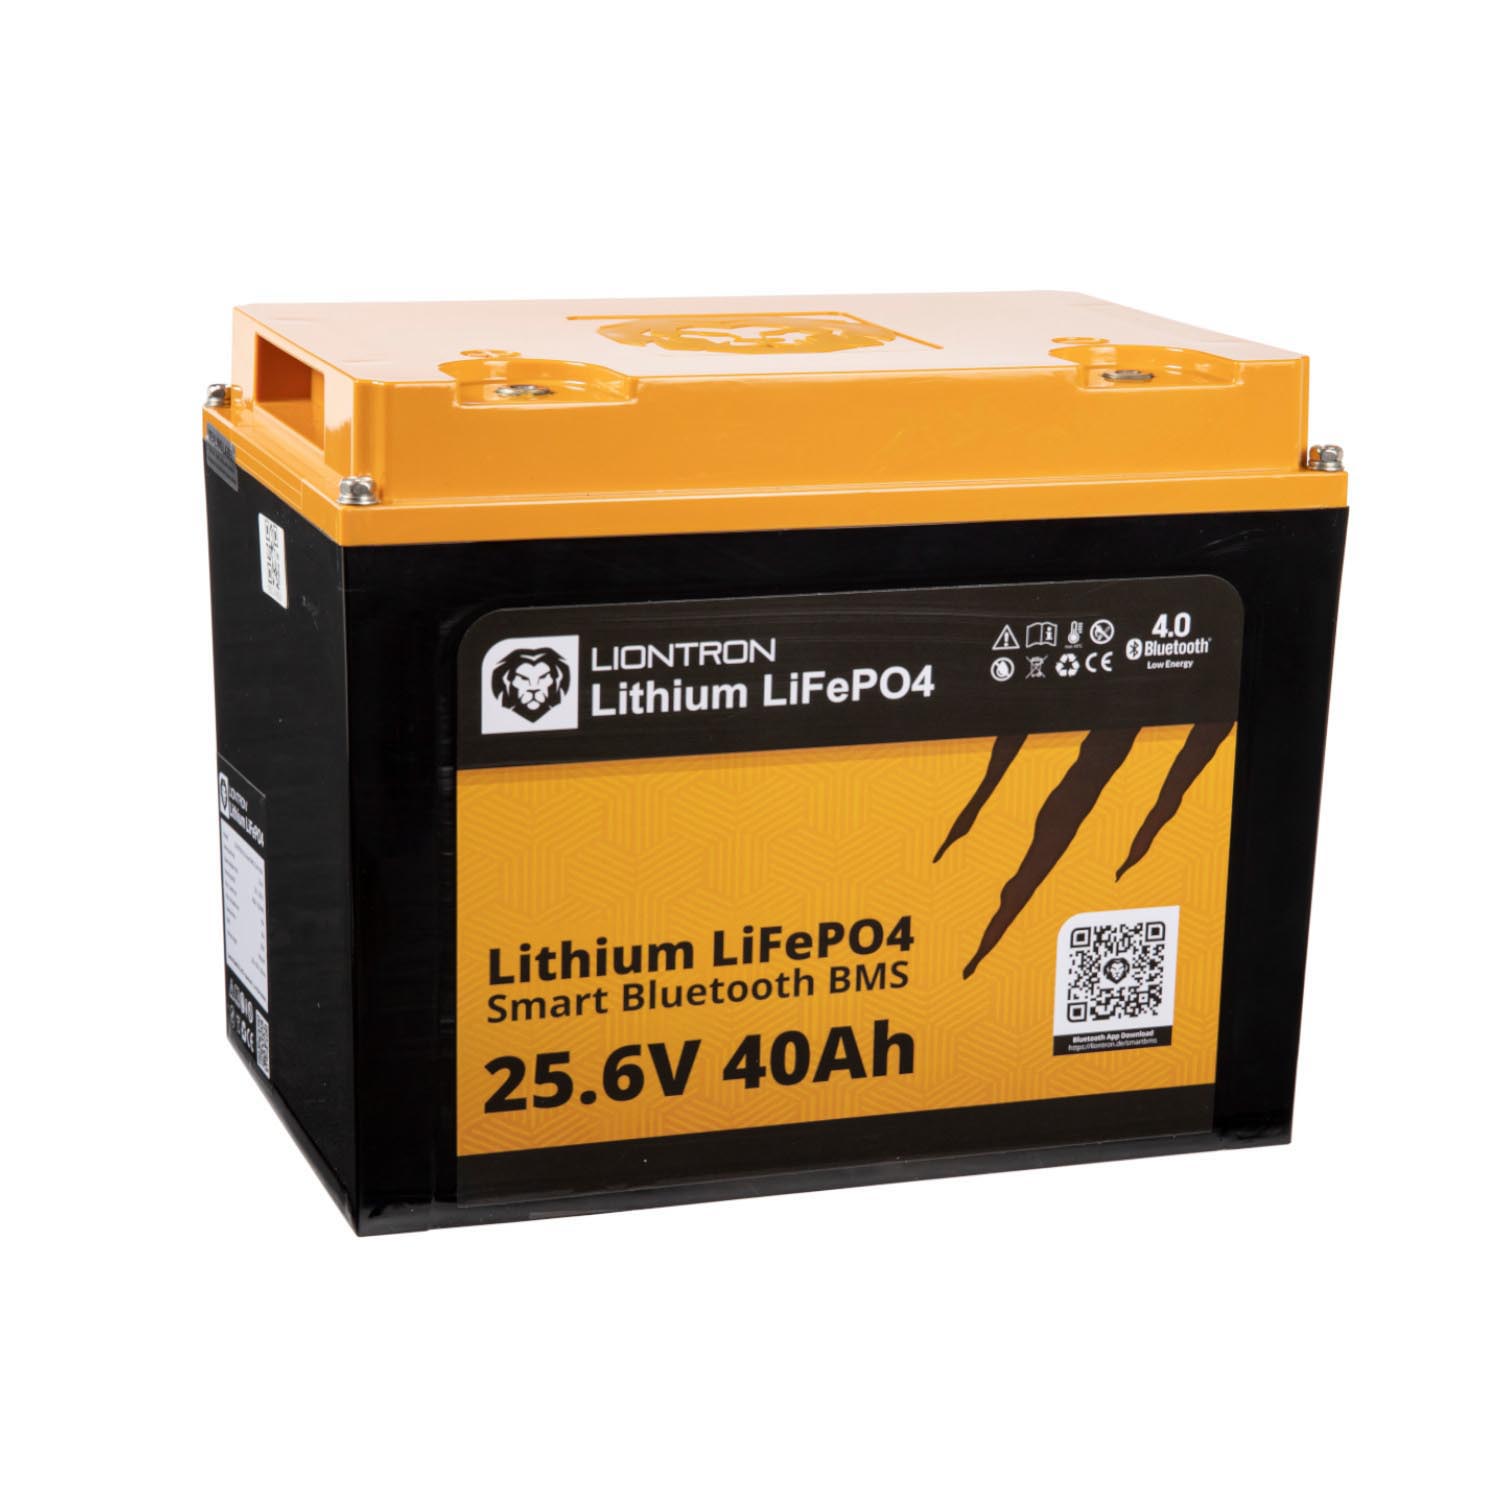 Liontron 40Ah 25,6V LiFePO4 Lithium Batterie BMS Bluetooth mit App (USt-befreit nach §12 Abs.3 Nr. 1 S.1 UStG)